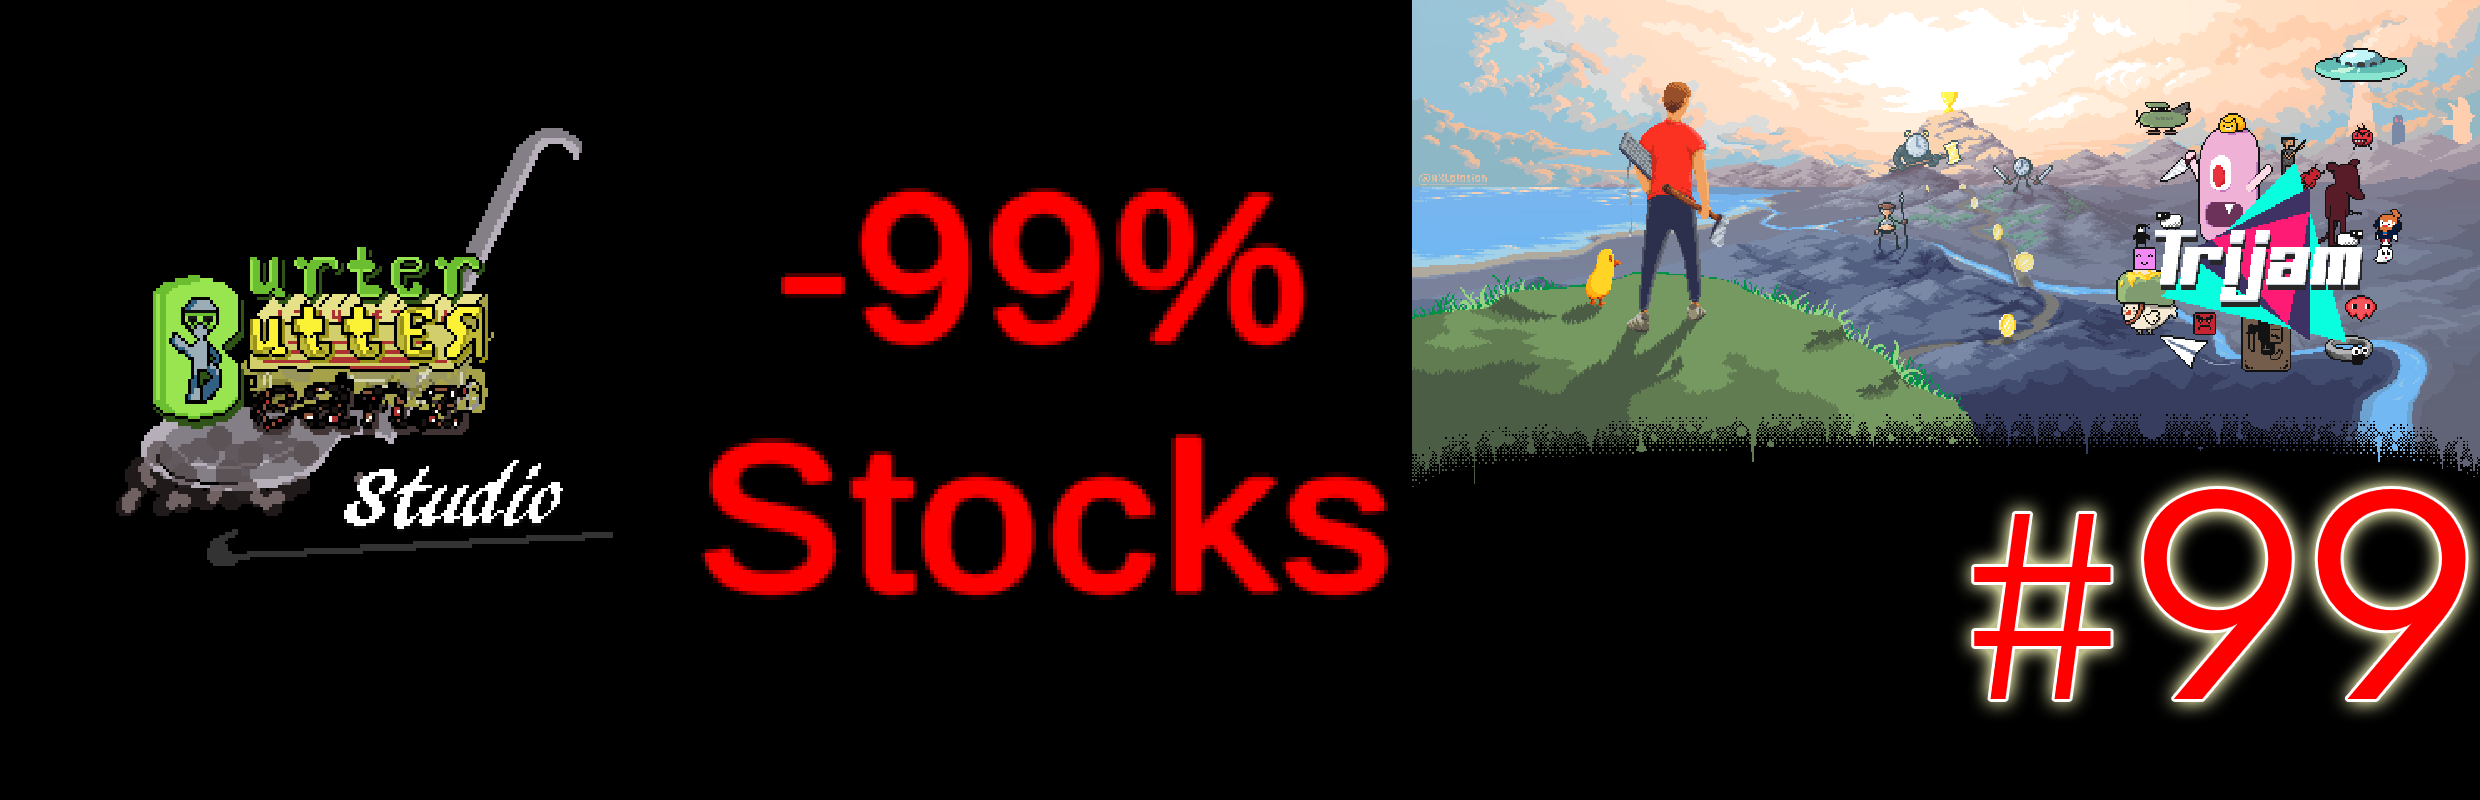 -99 Stocks